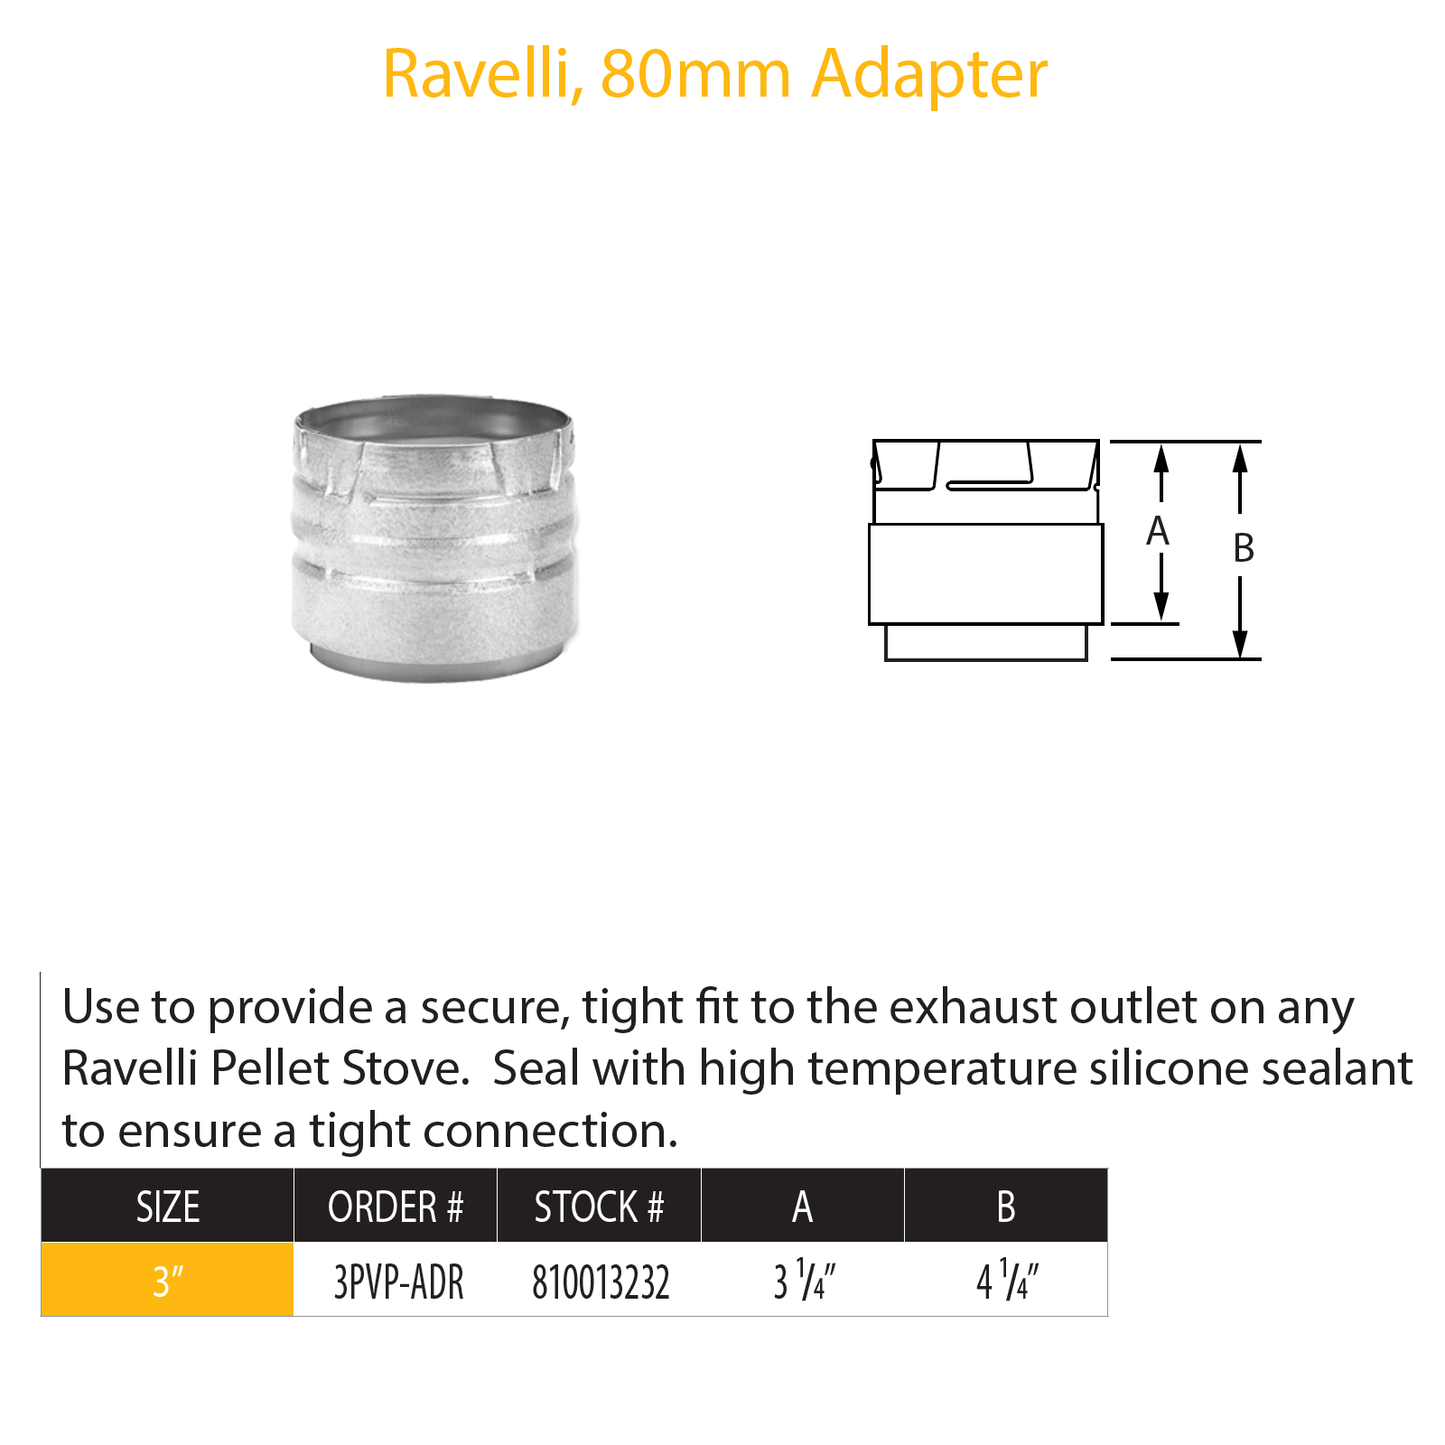 DuraVent Pellet Vent Pro 3" Appliance Adapter Ravelli | 3PVP-ADR